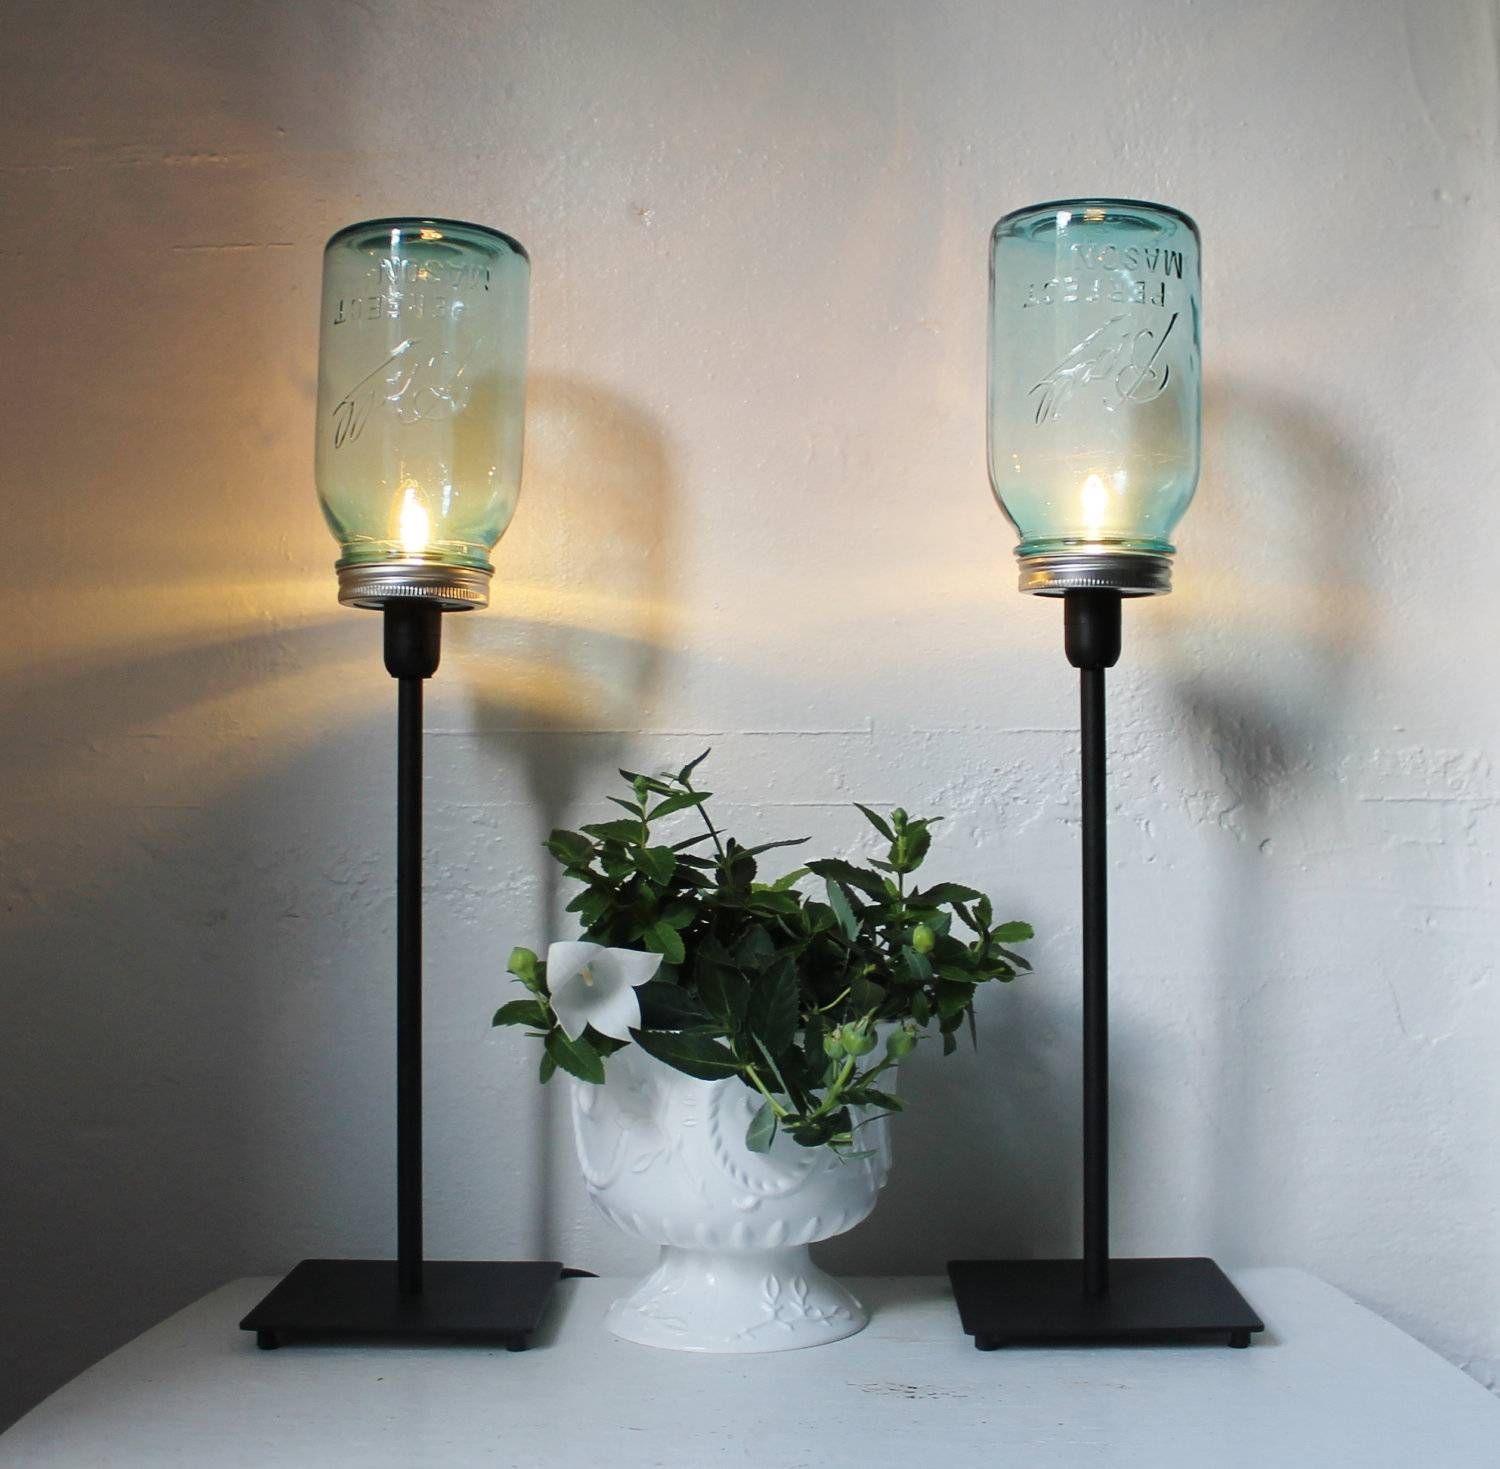 How To Create Mason Jar Lighting Fixtures | Homesfeed With Glass Jug Lights Fixtures (View 12 of 15)